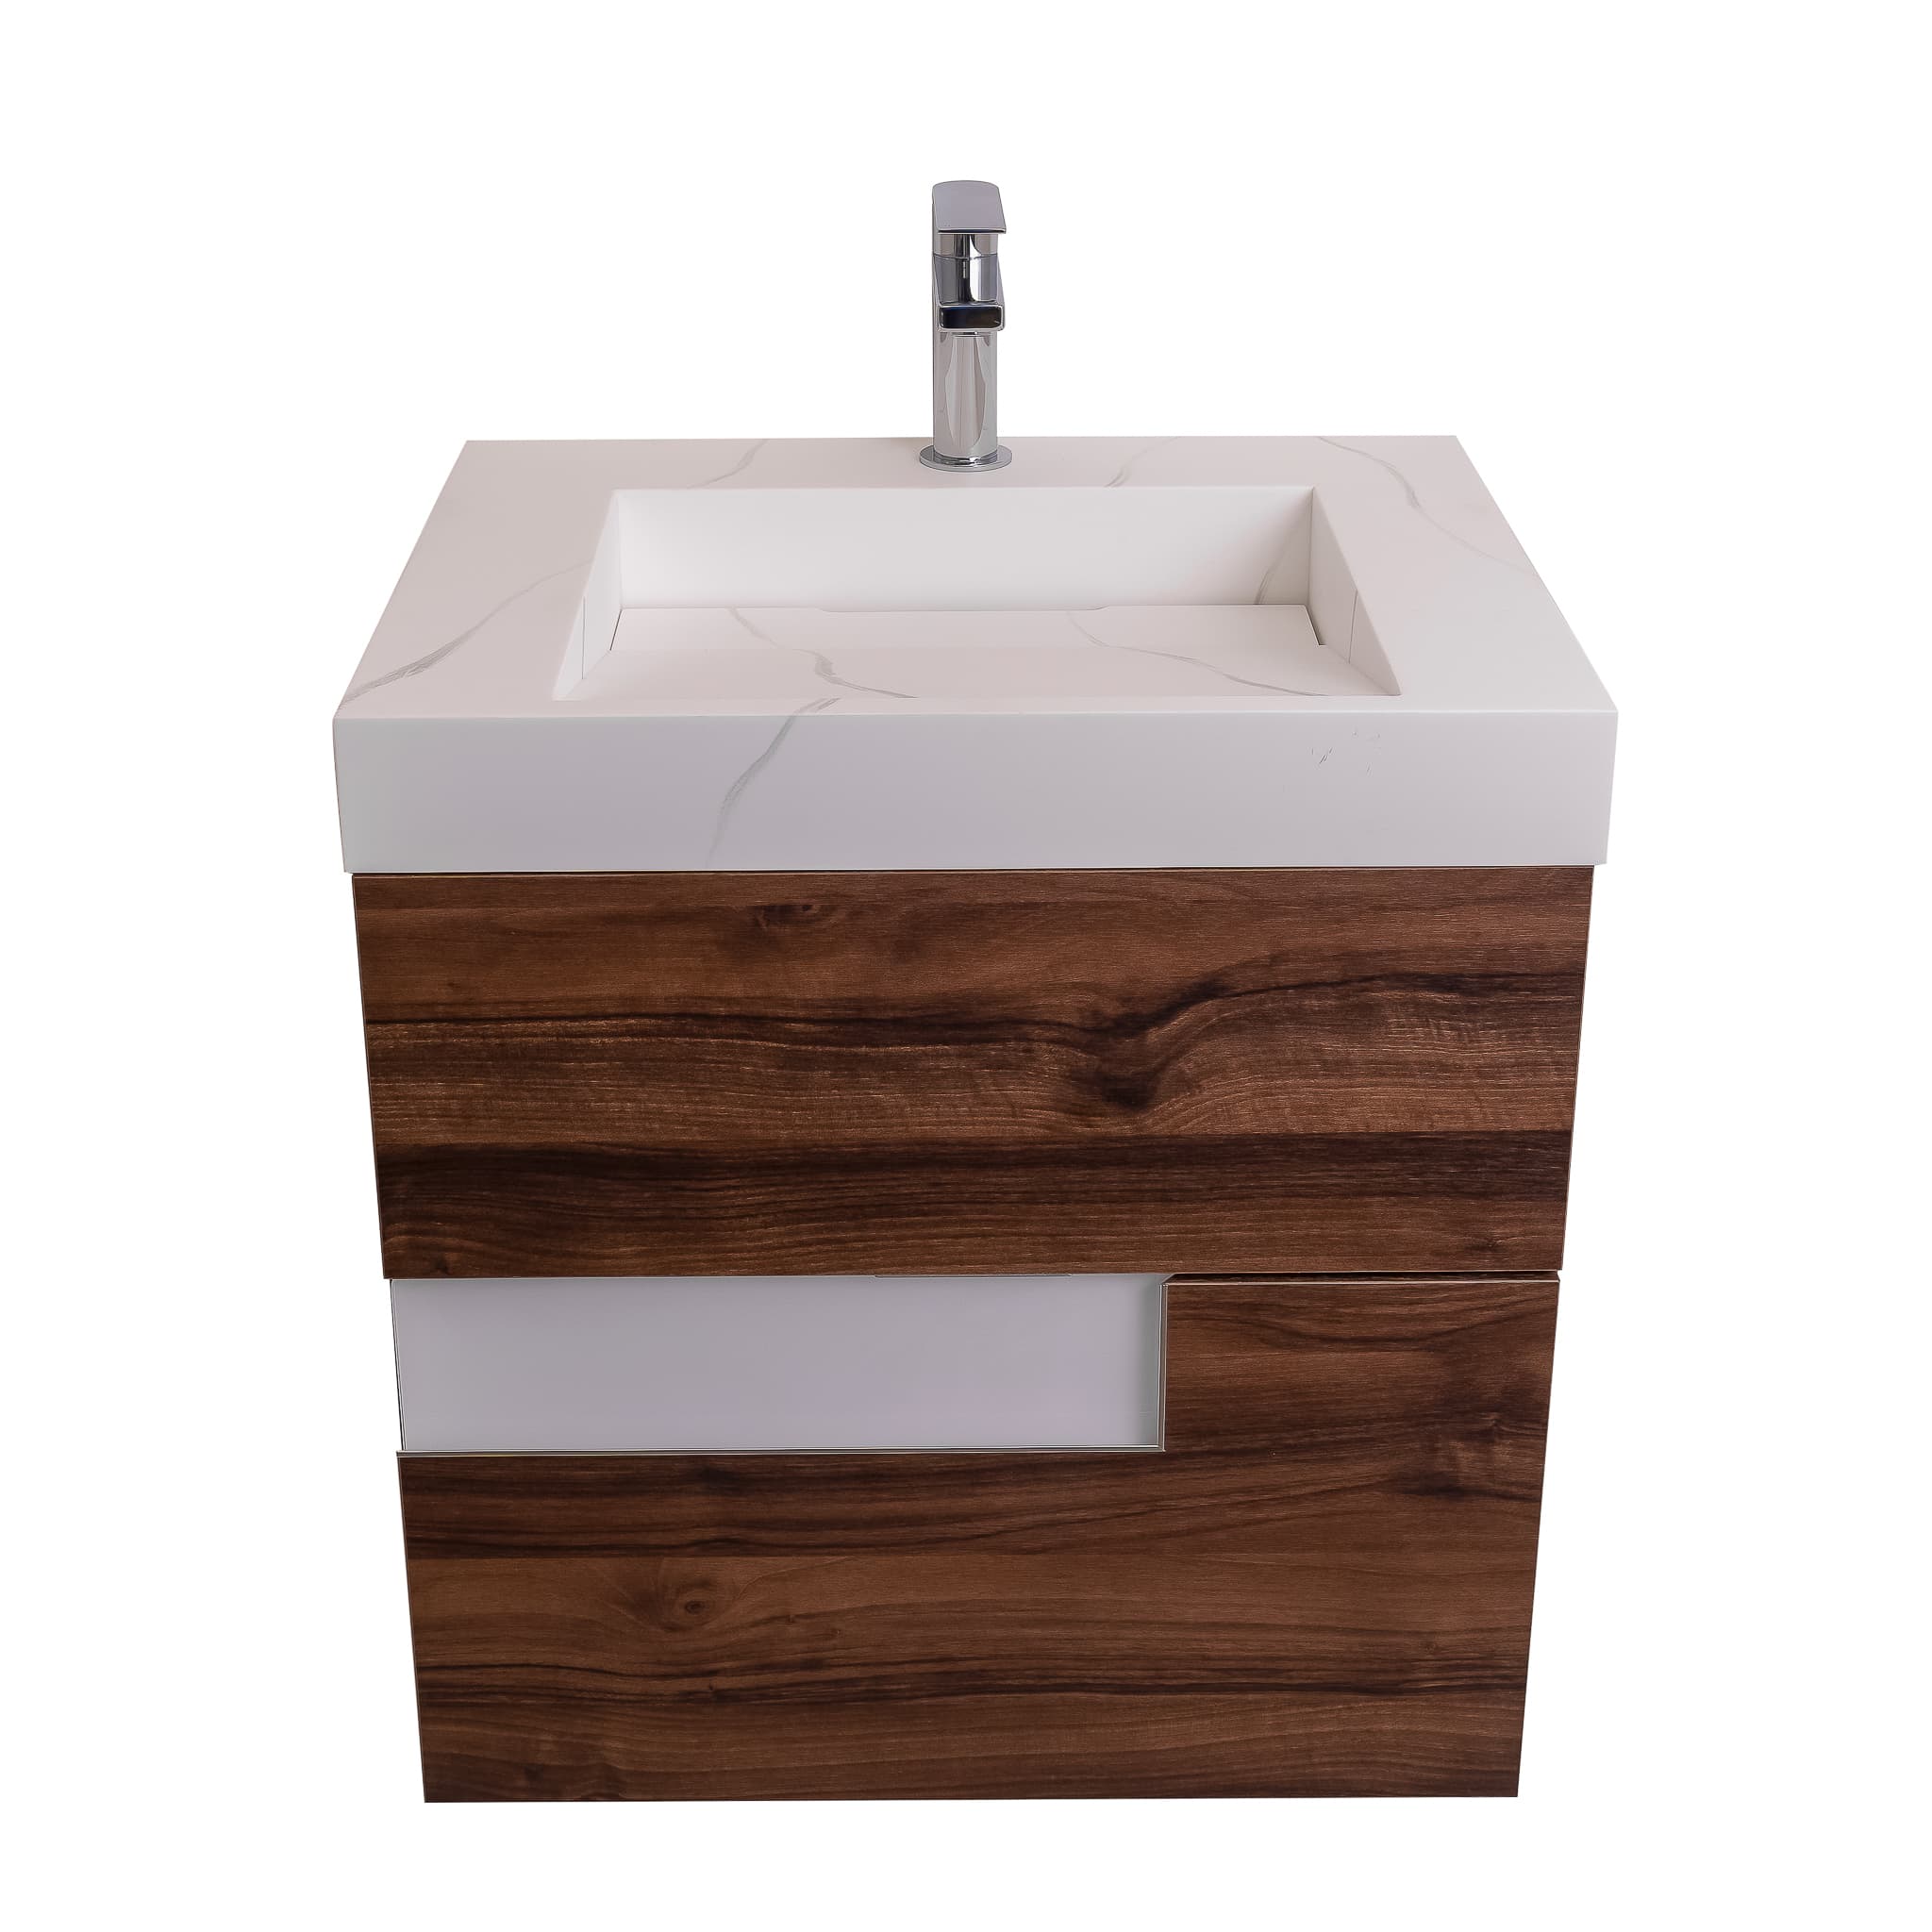 Vision 23.5 Valenti Medium Brown Wood Cabinet, Solid Surface Matte White Top Carrara Infinity Sink, Wall Mounted Modern Vanity Set